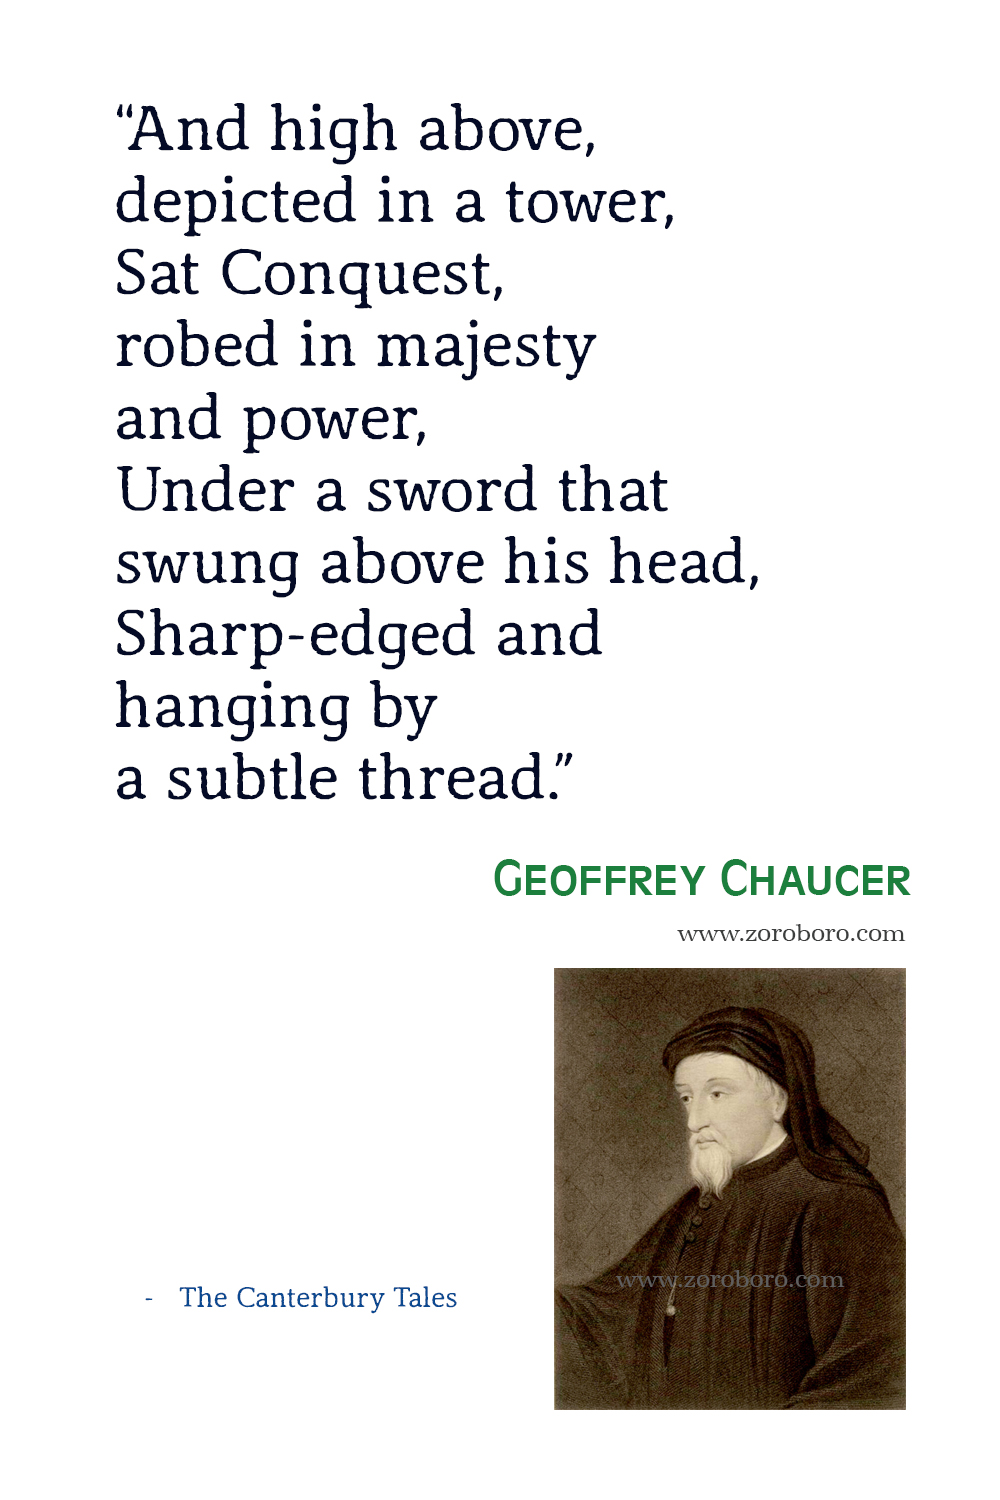 Geoffrey Chaucer Quotes, Geoffrey Chaucer Poems, Geoffrey Chaucer Poet, Geoffrey Chaucer The Canterbury Tales Quotes, Geoffrey Chaucer Books.